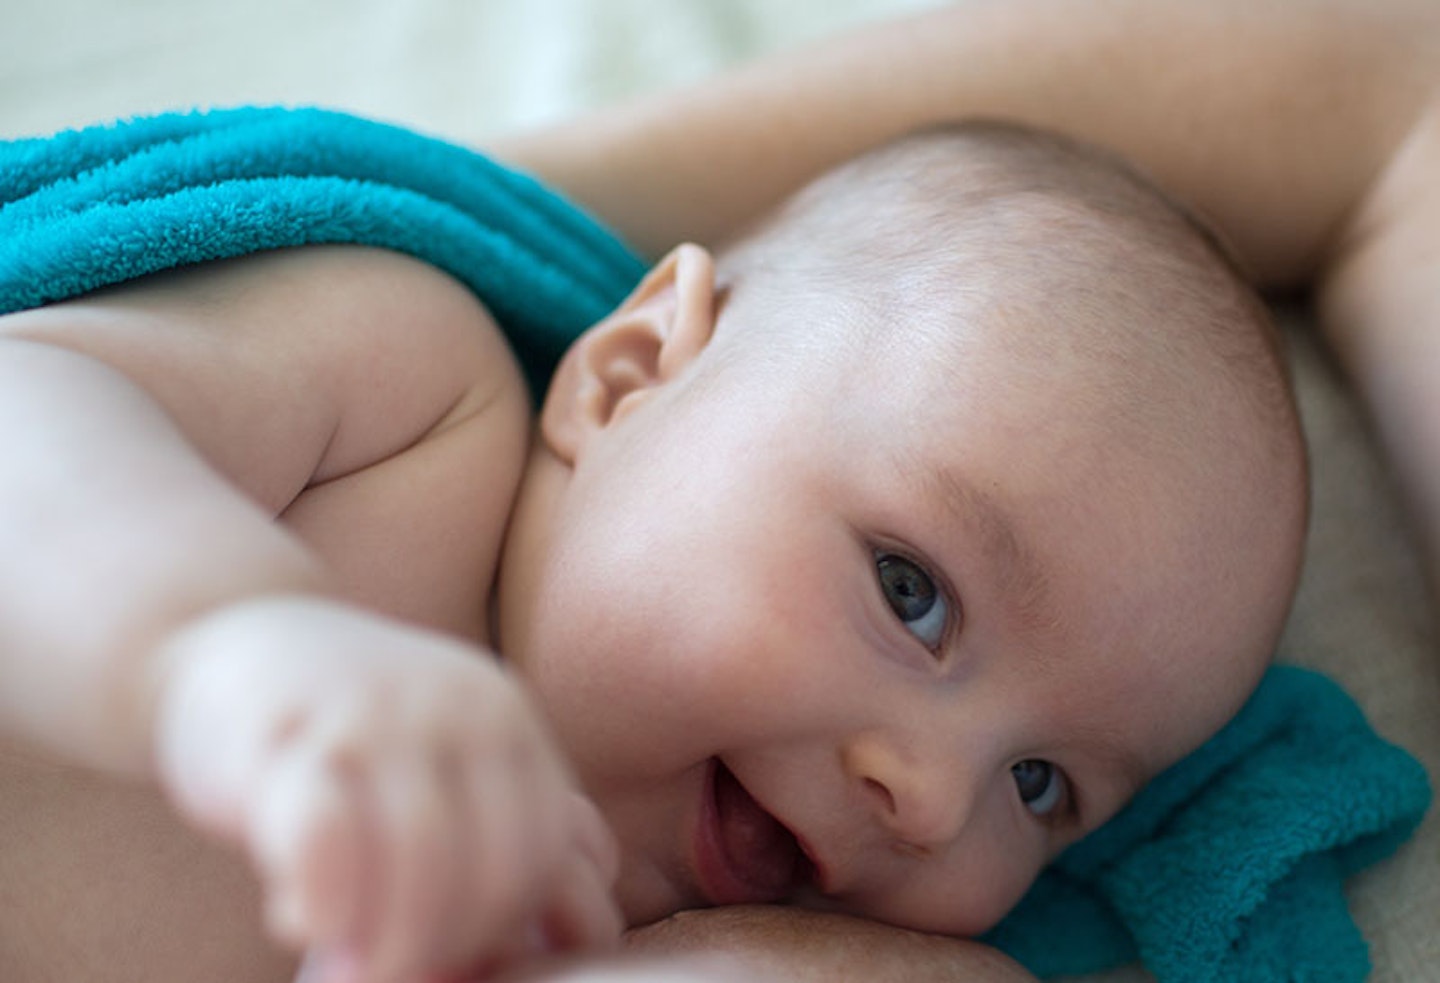 Breastfeeding can make you happier